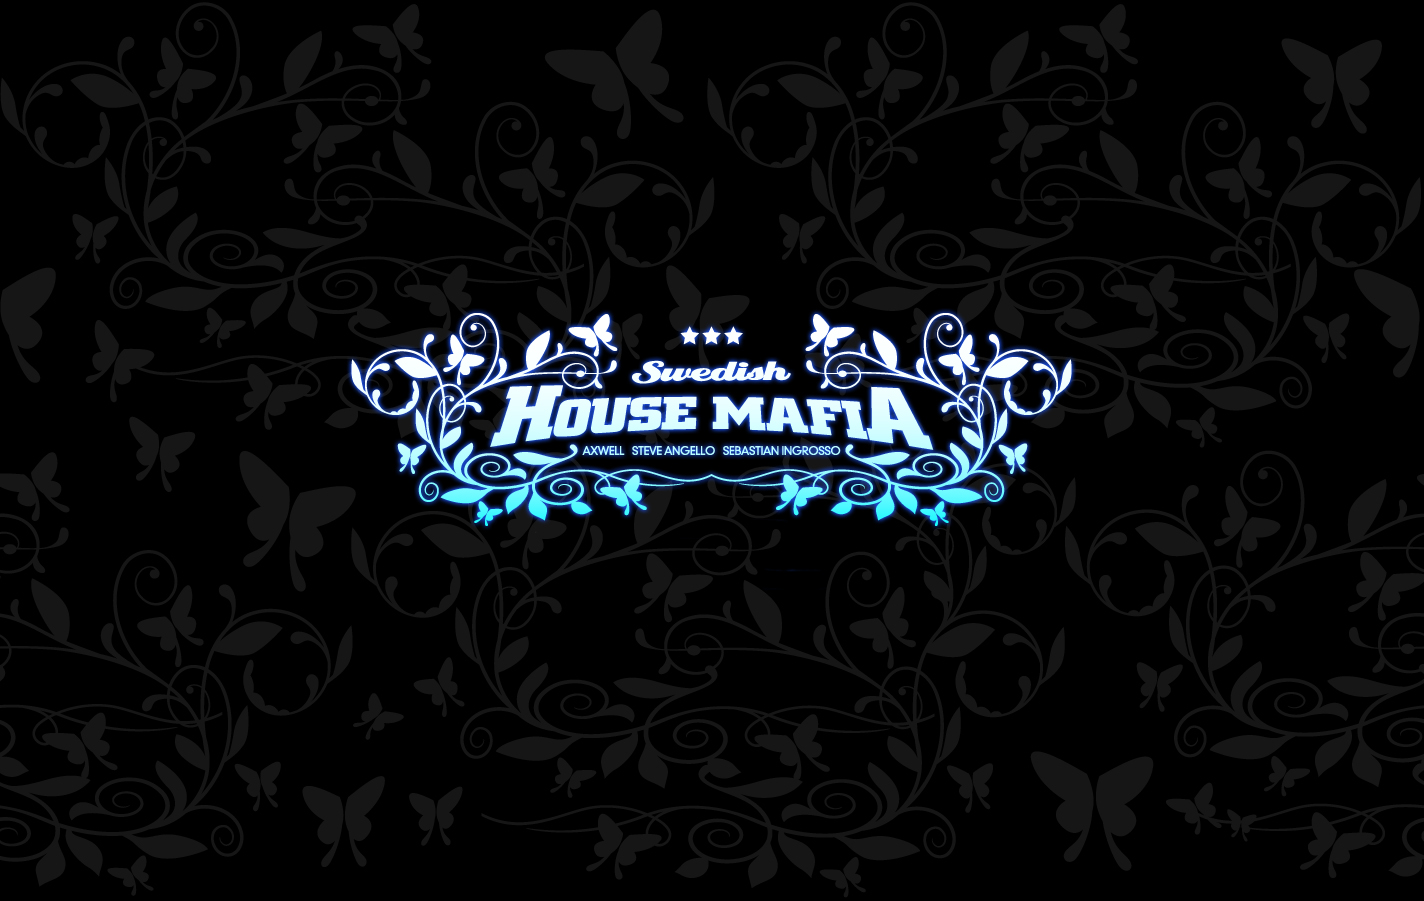 Swedish House Mafia Wallpaper